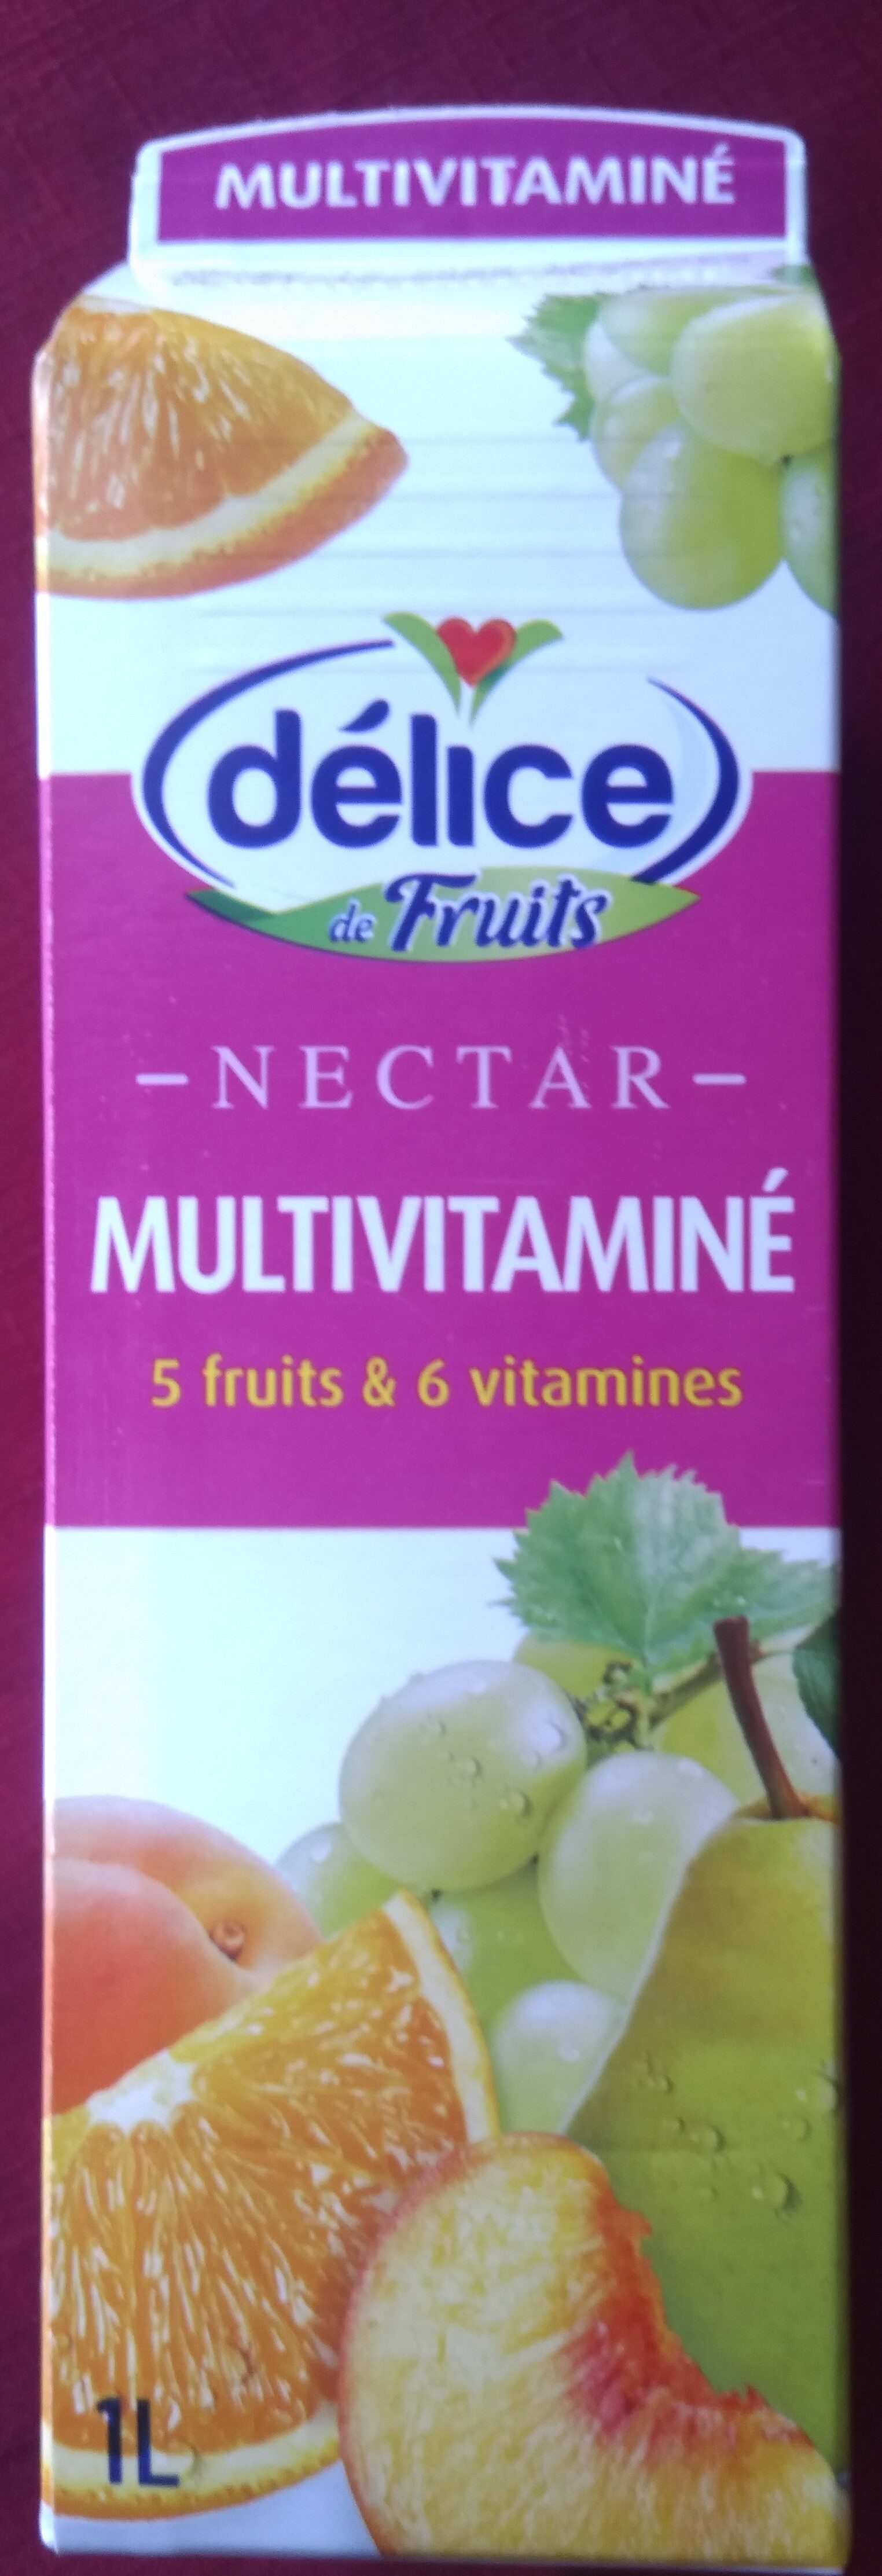 Nectar multivitaminé - Producte - fr